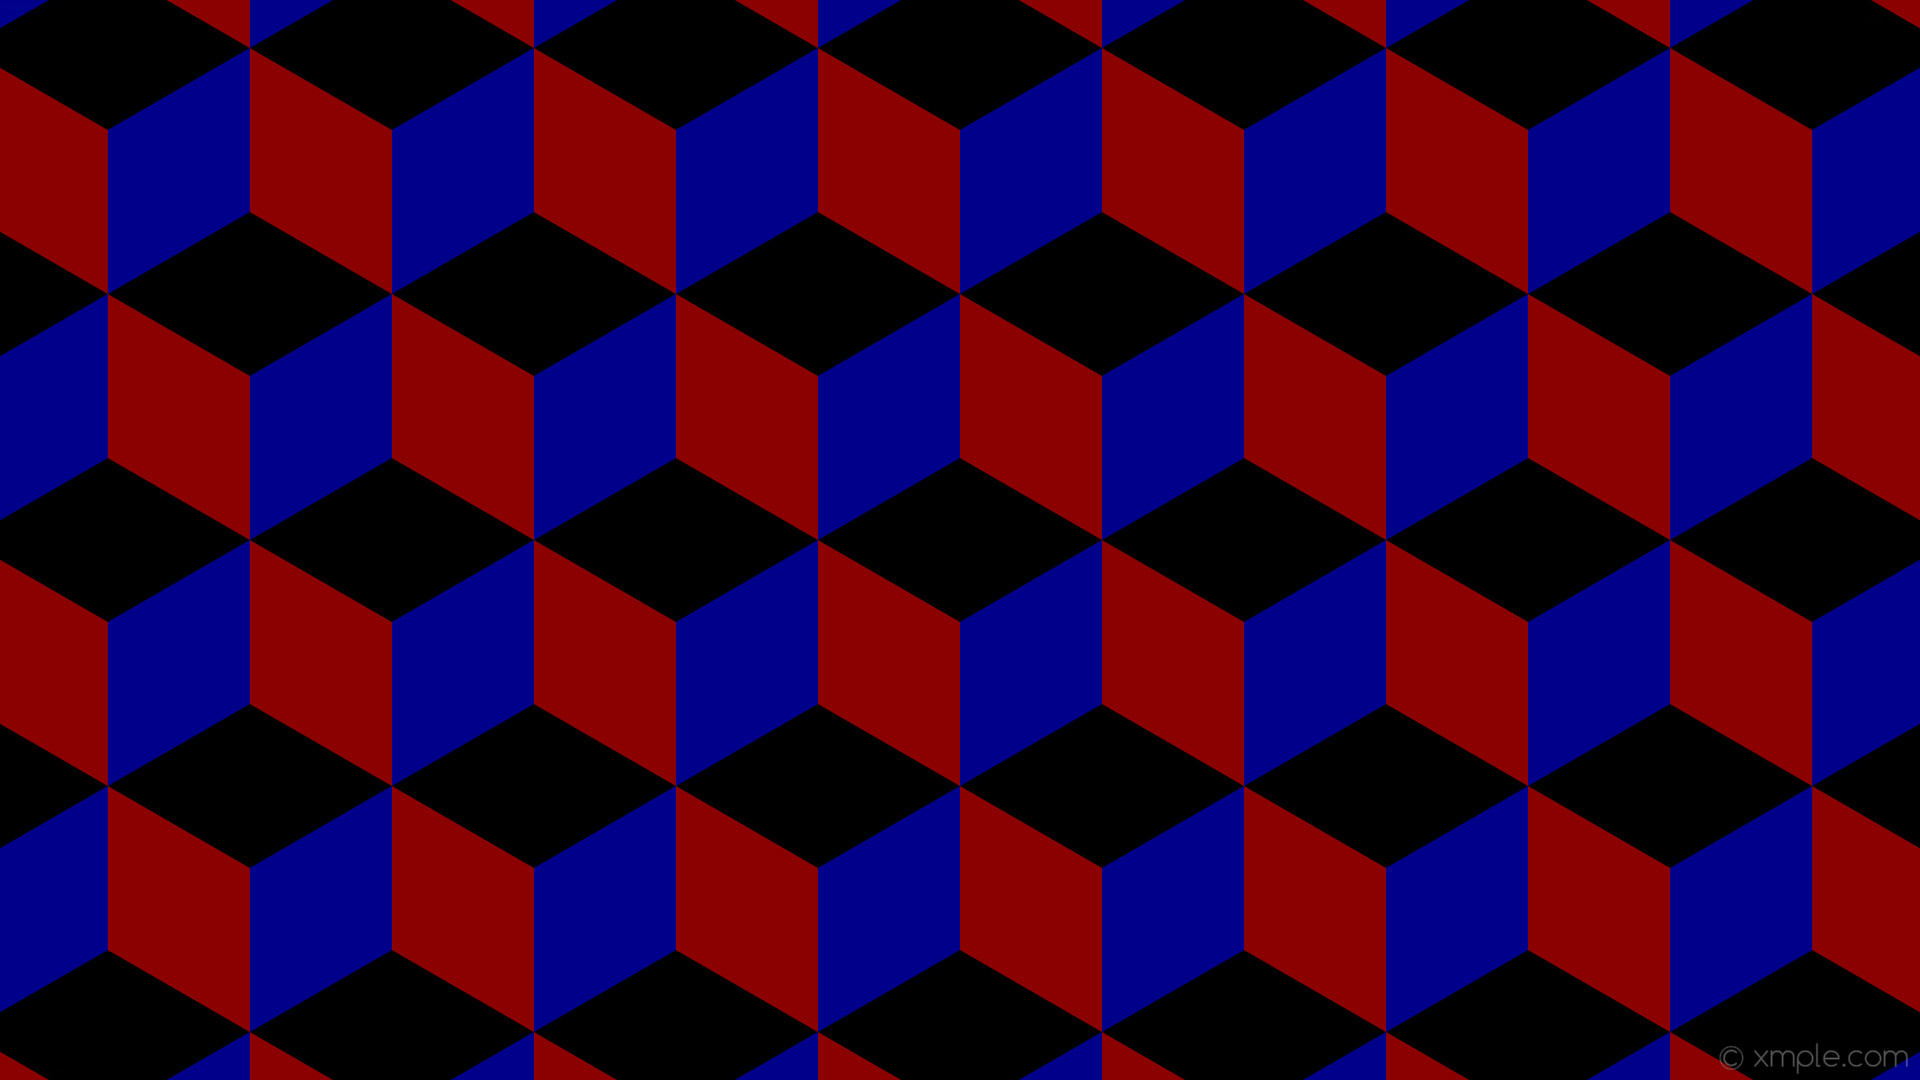 1920x1080 wallpaper red 3d cubes blue black dark red dark blue #000000 #8b0000 #00008b